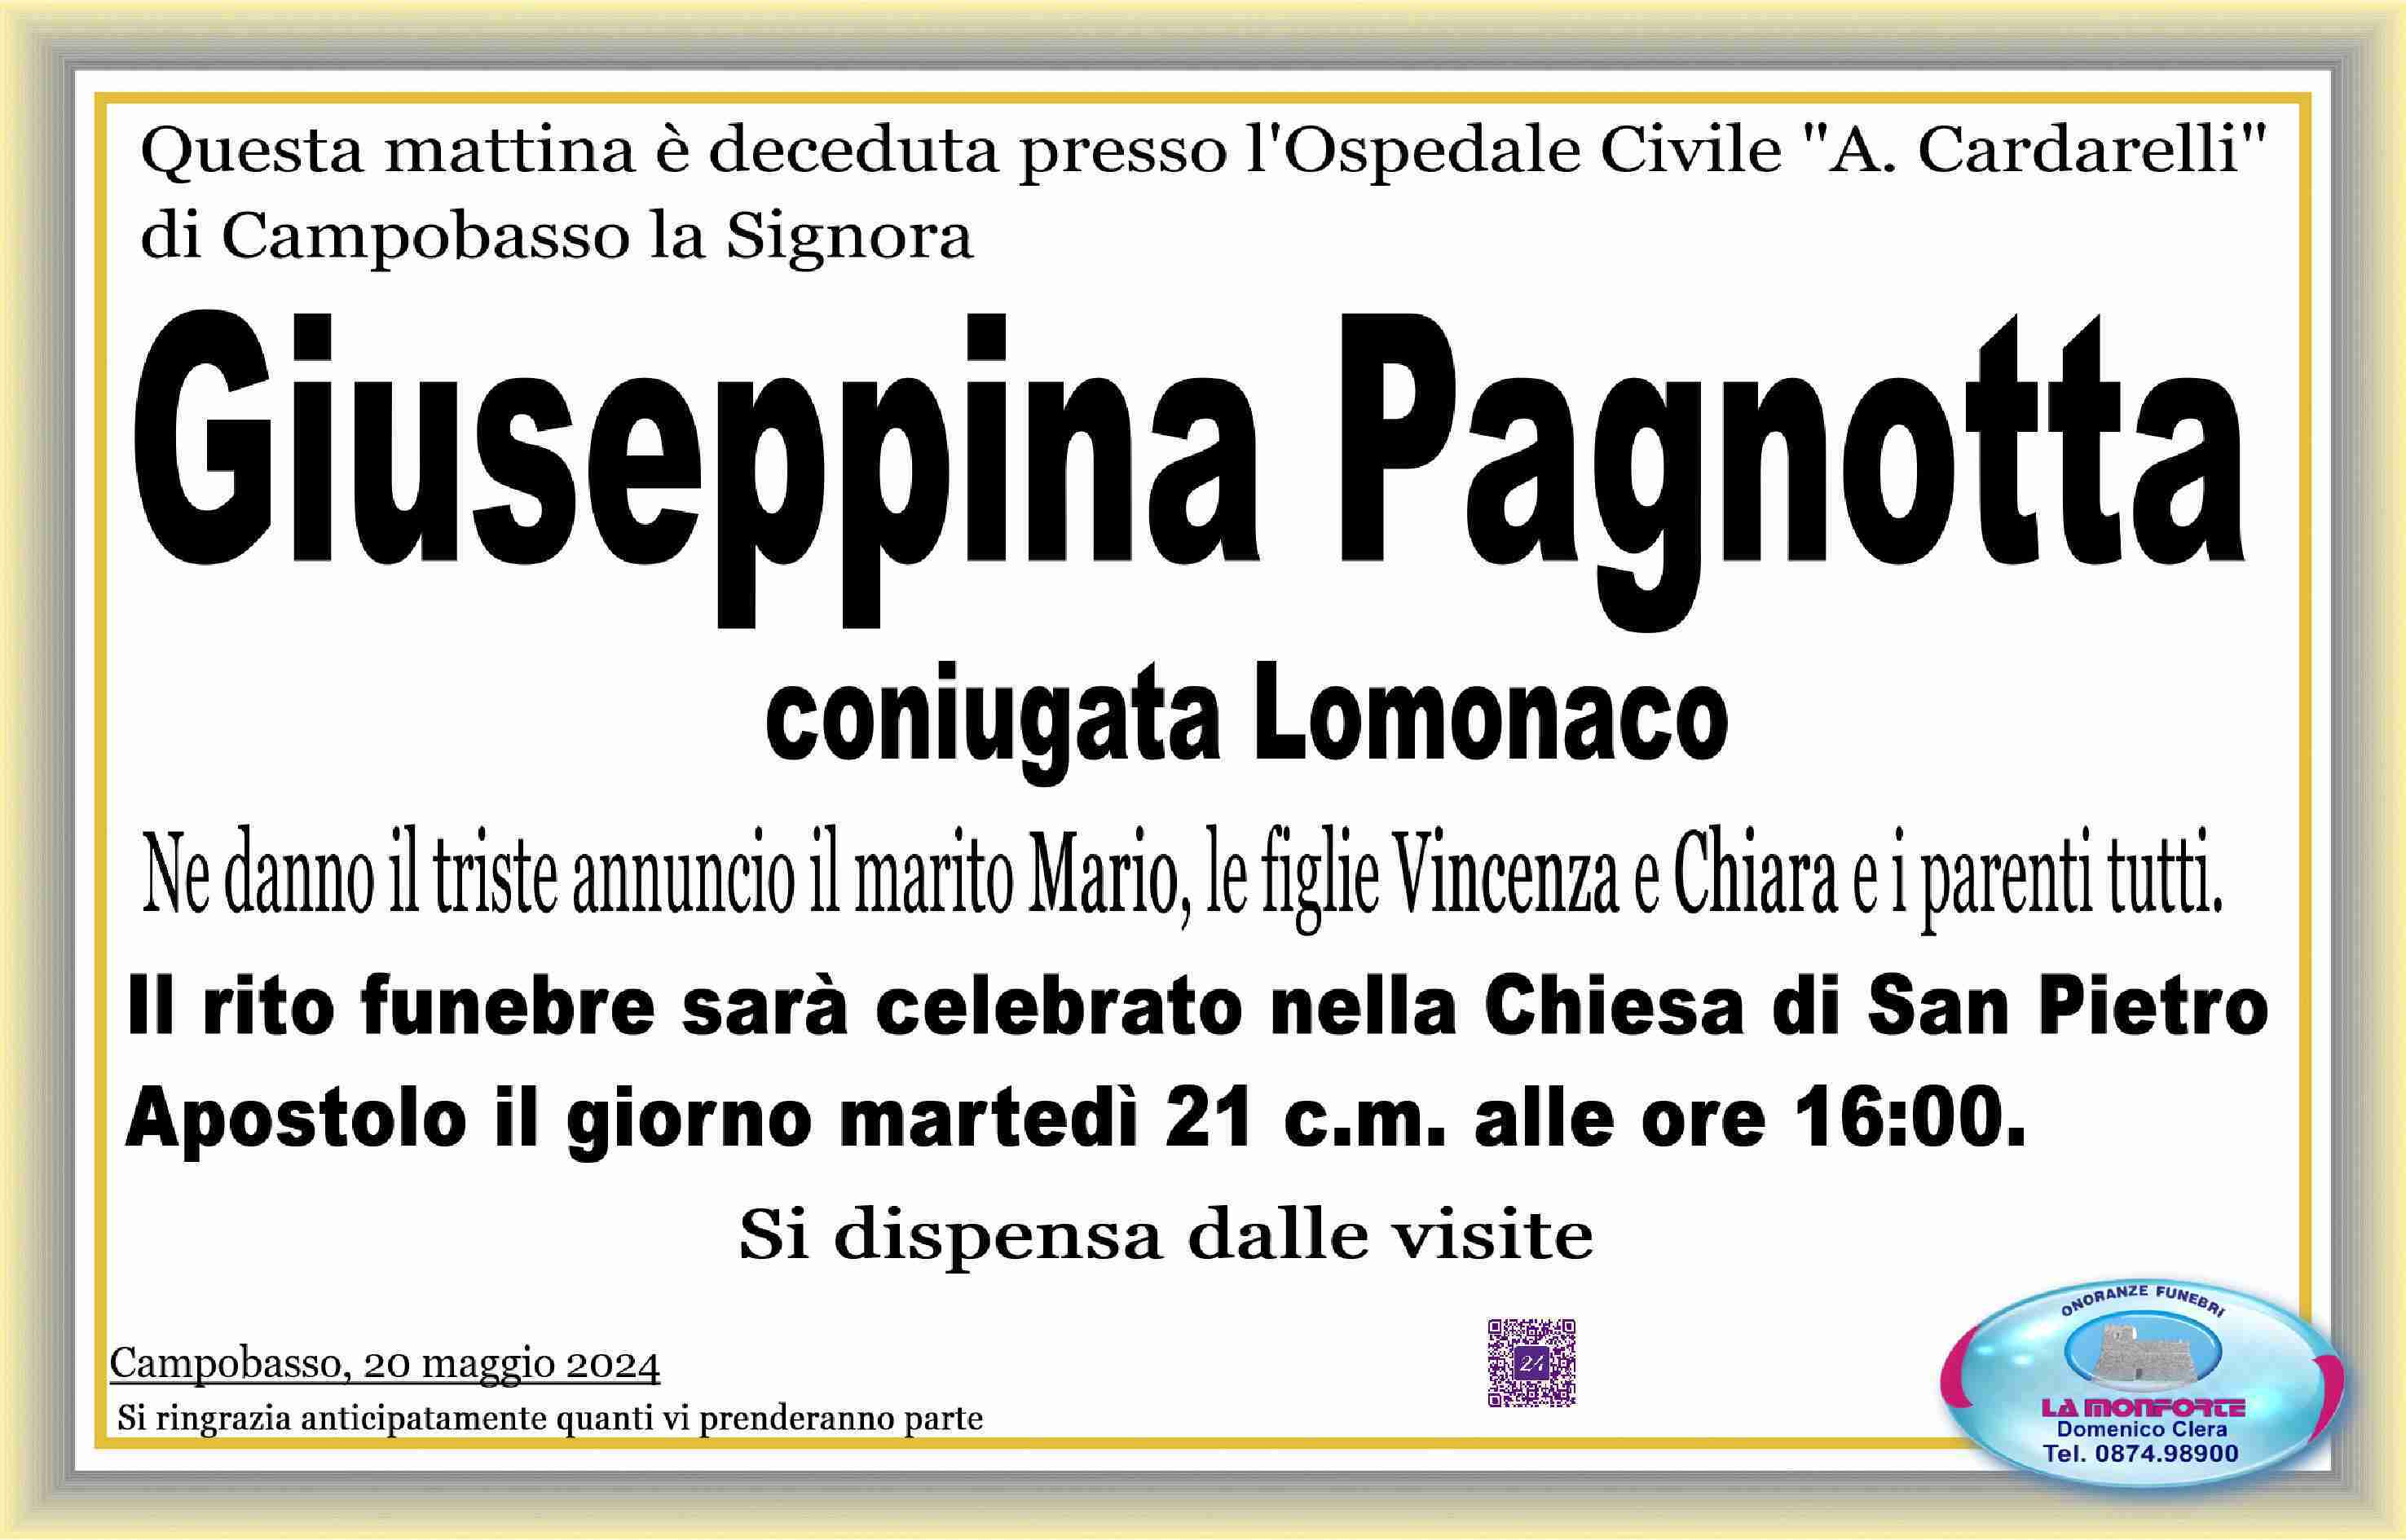 Giuseppina Pagnotta